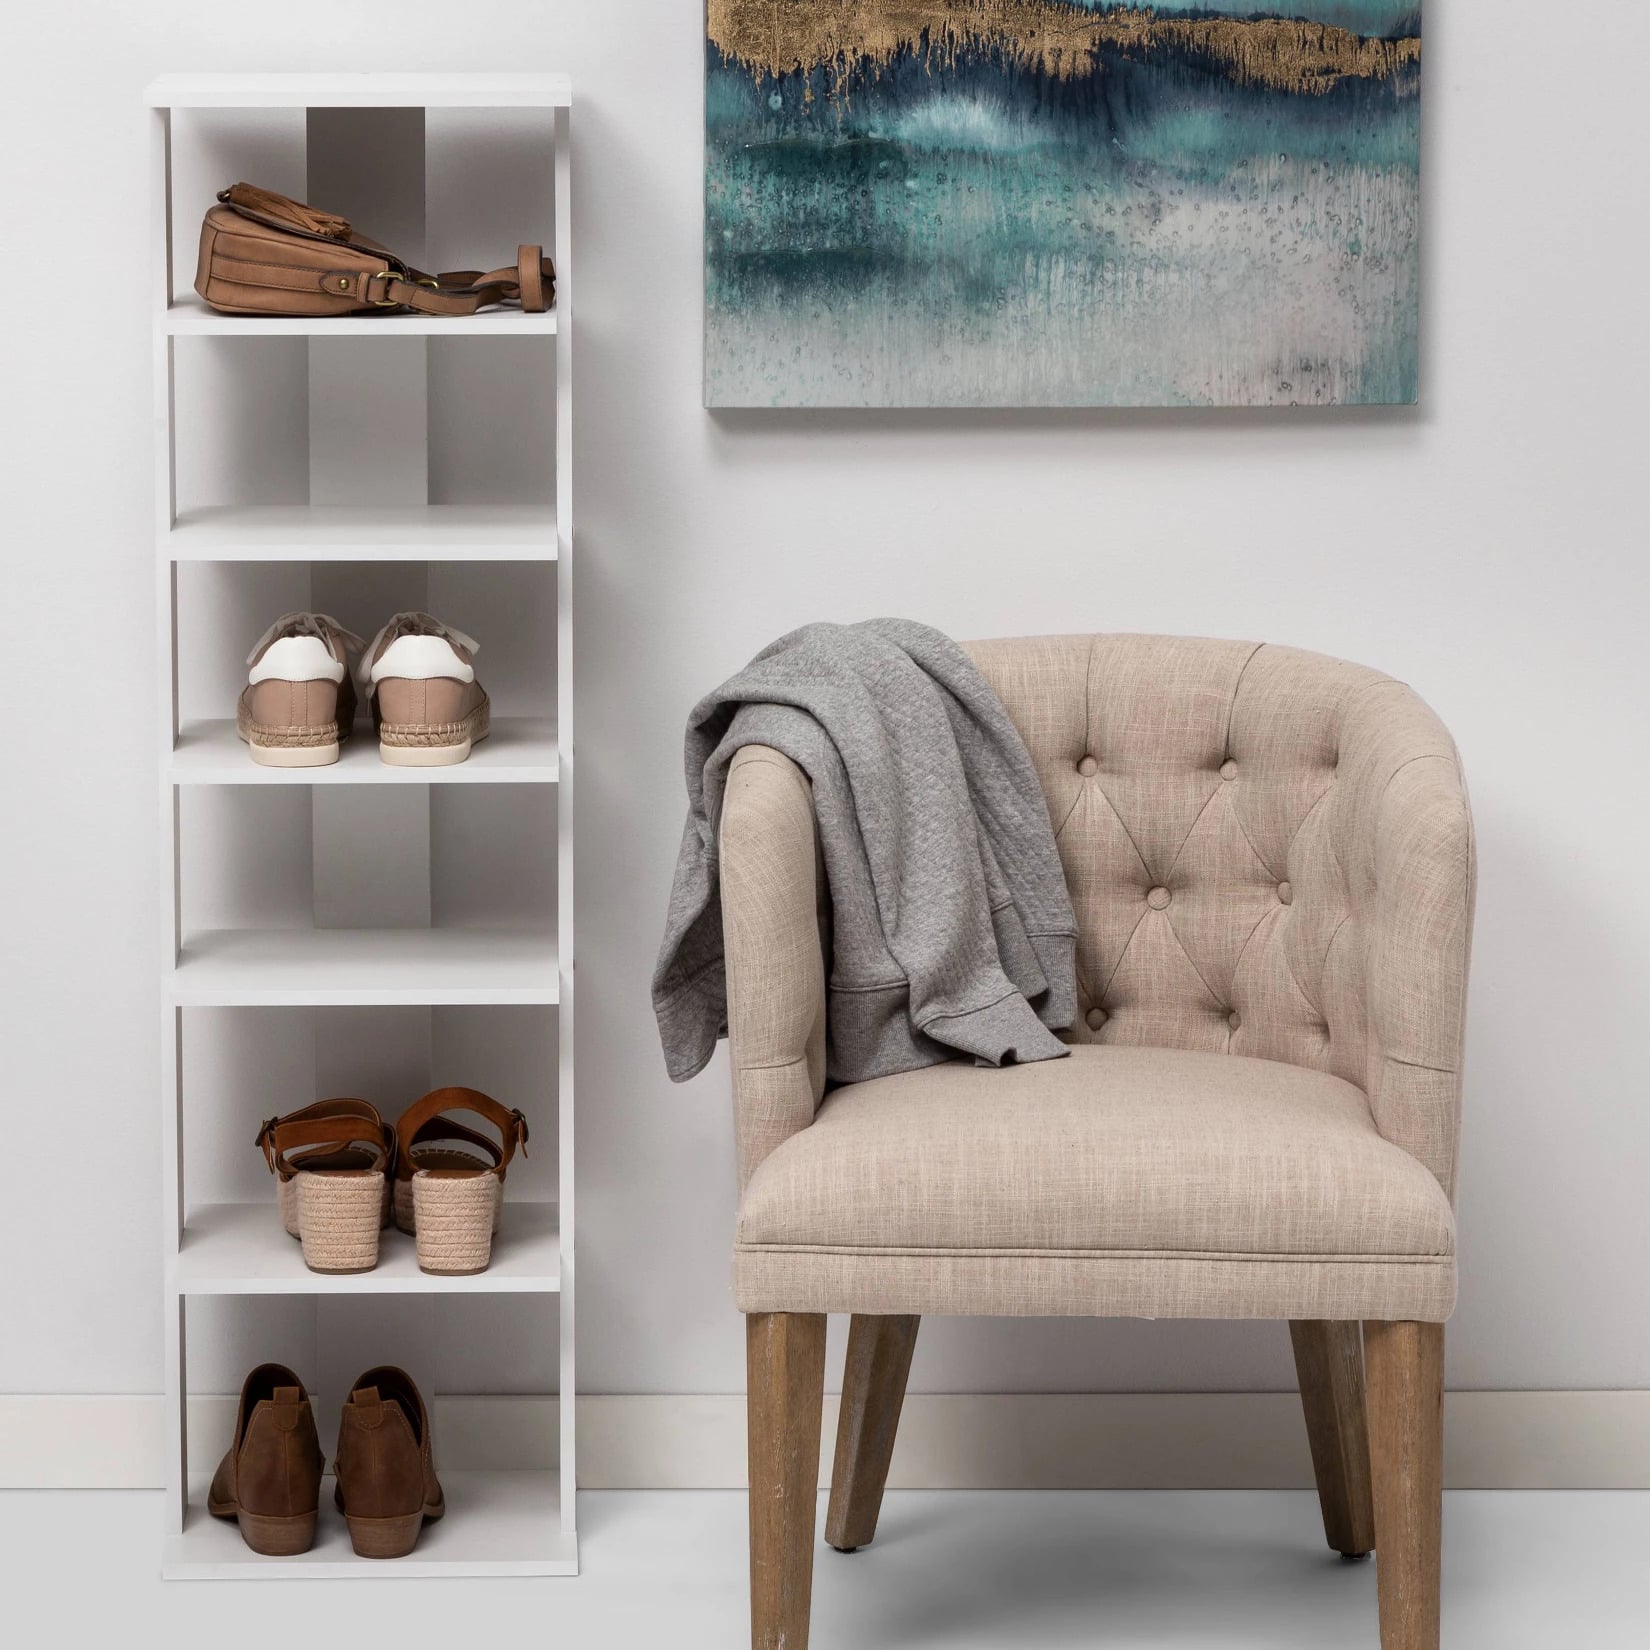 Expandable Shoe Shelf - Room Essentials™ : Target